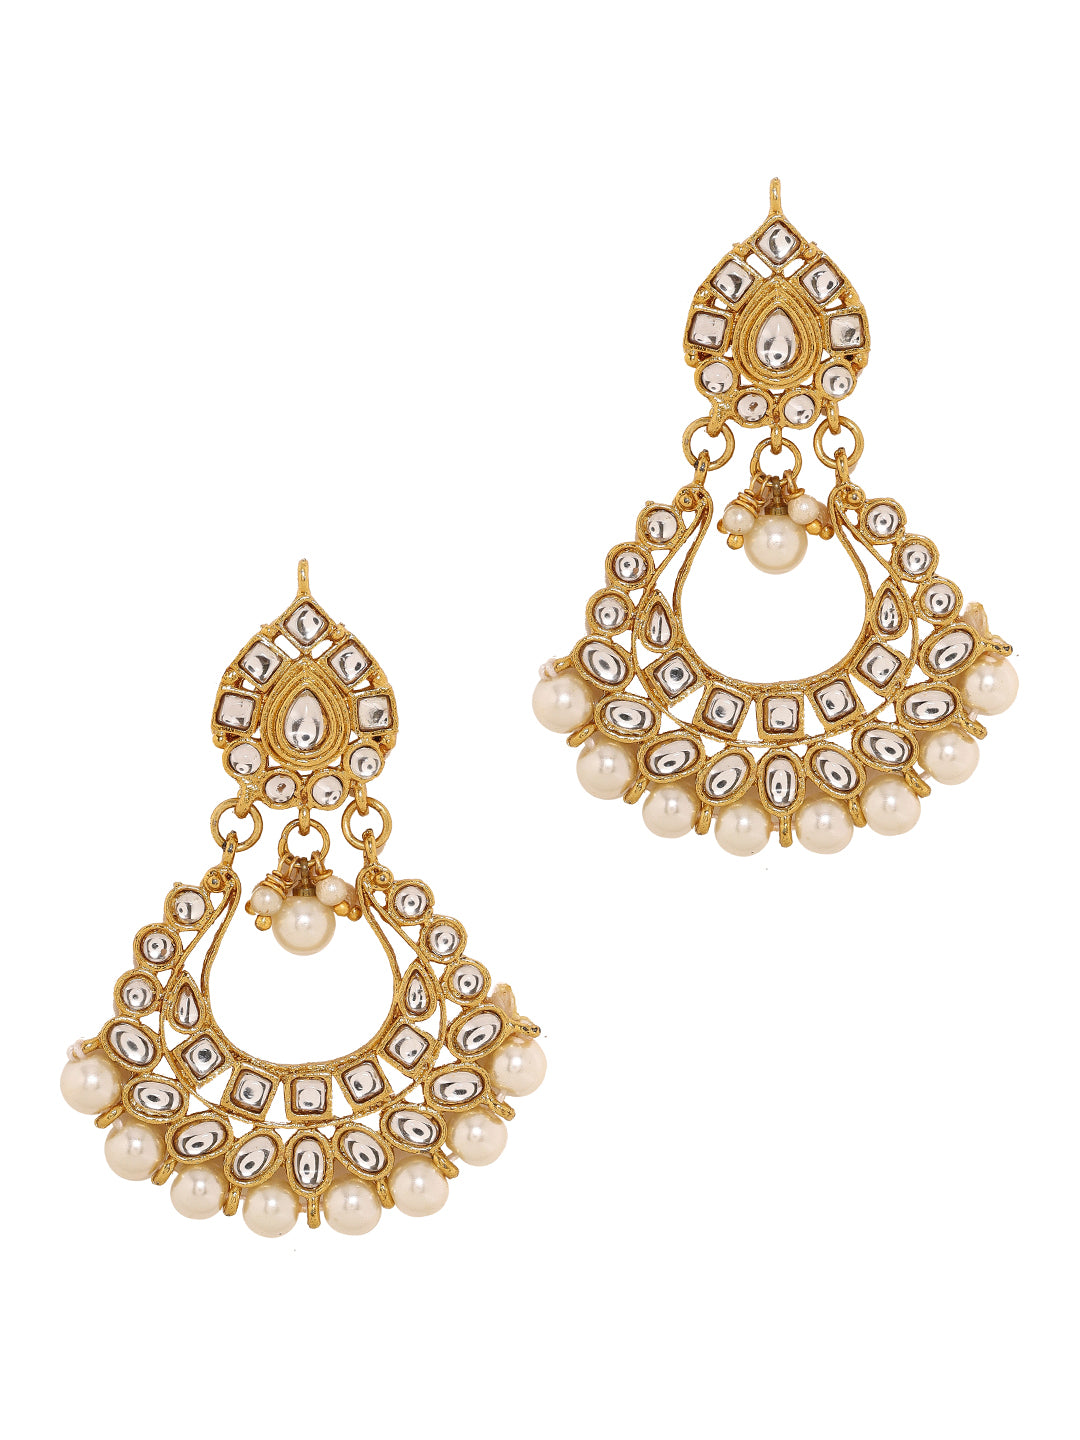 Priyaasi The Charm of Gold Plated Chandbalis with Pearls and Kundans